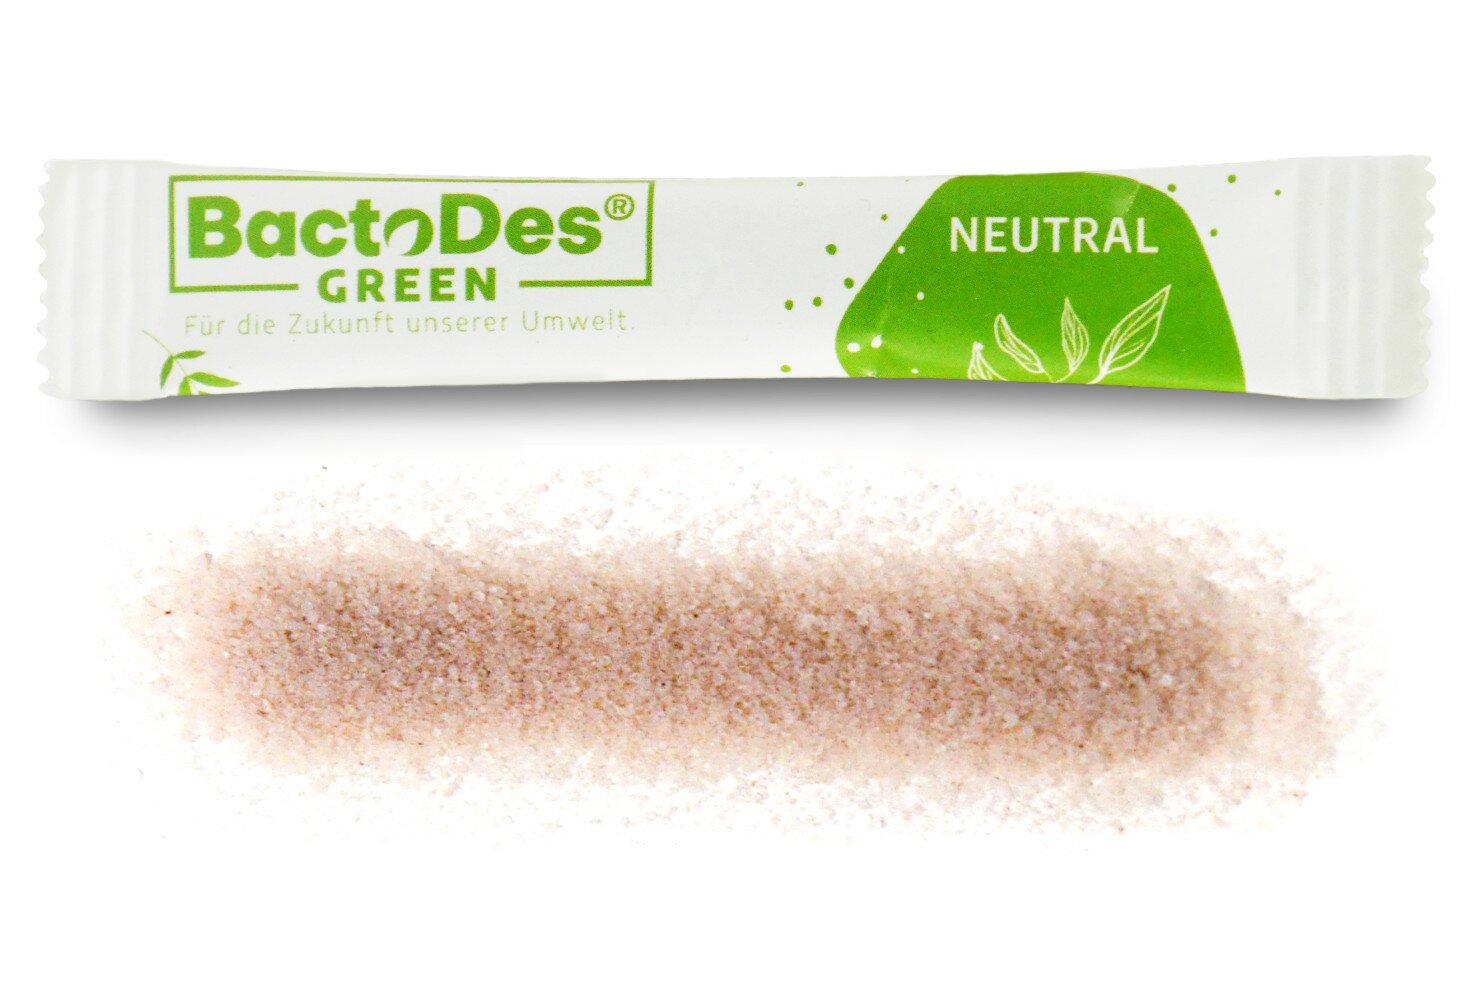 BactoDes Green Granulat neben einem BactoDes Green Stick.